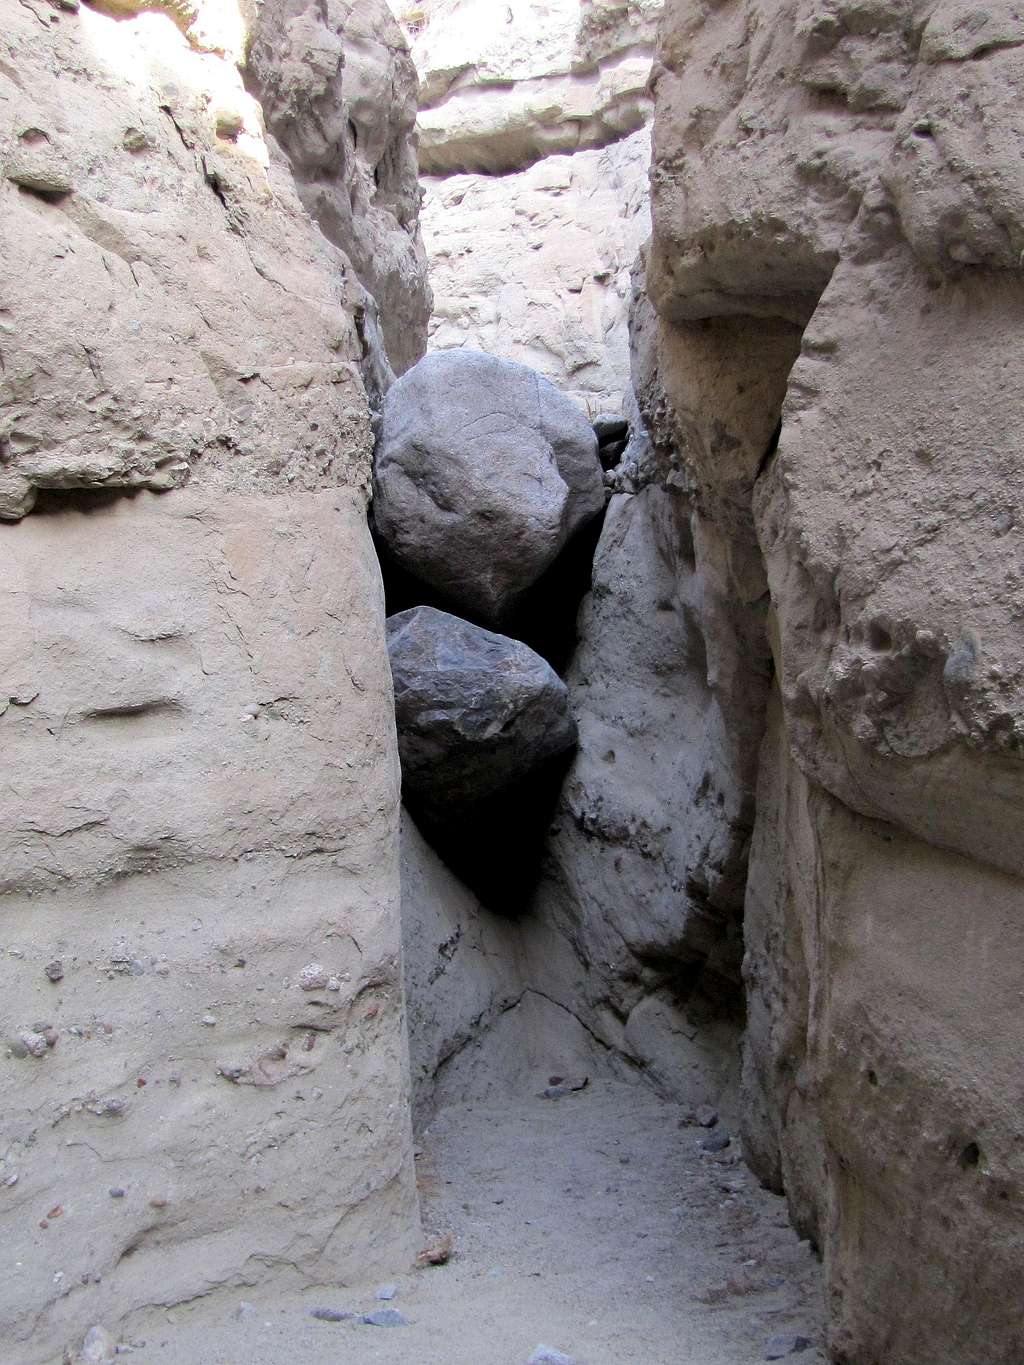 Choke stone in the slot canyon